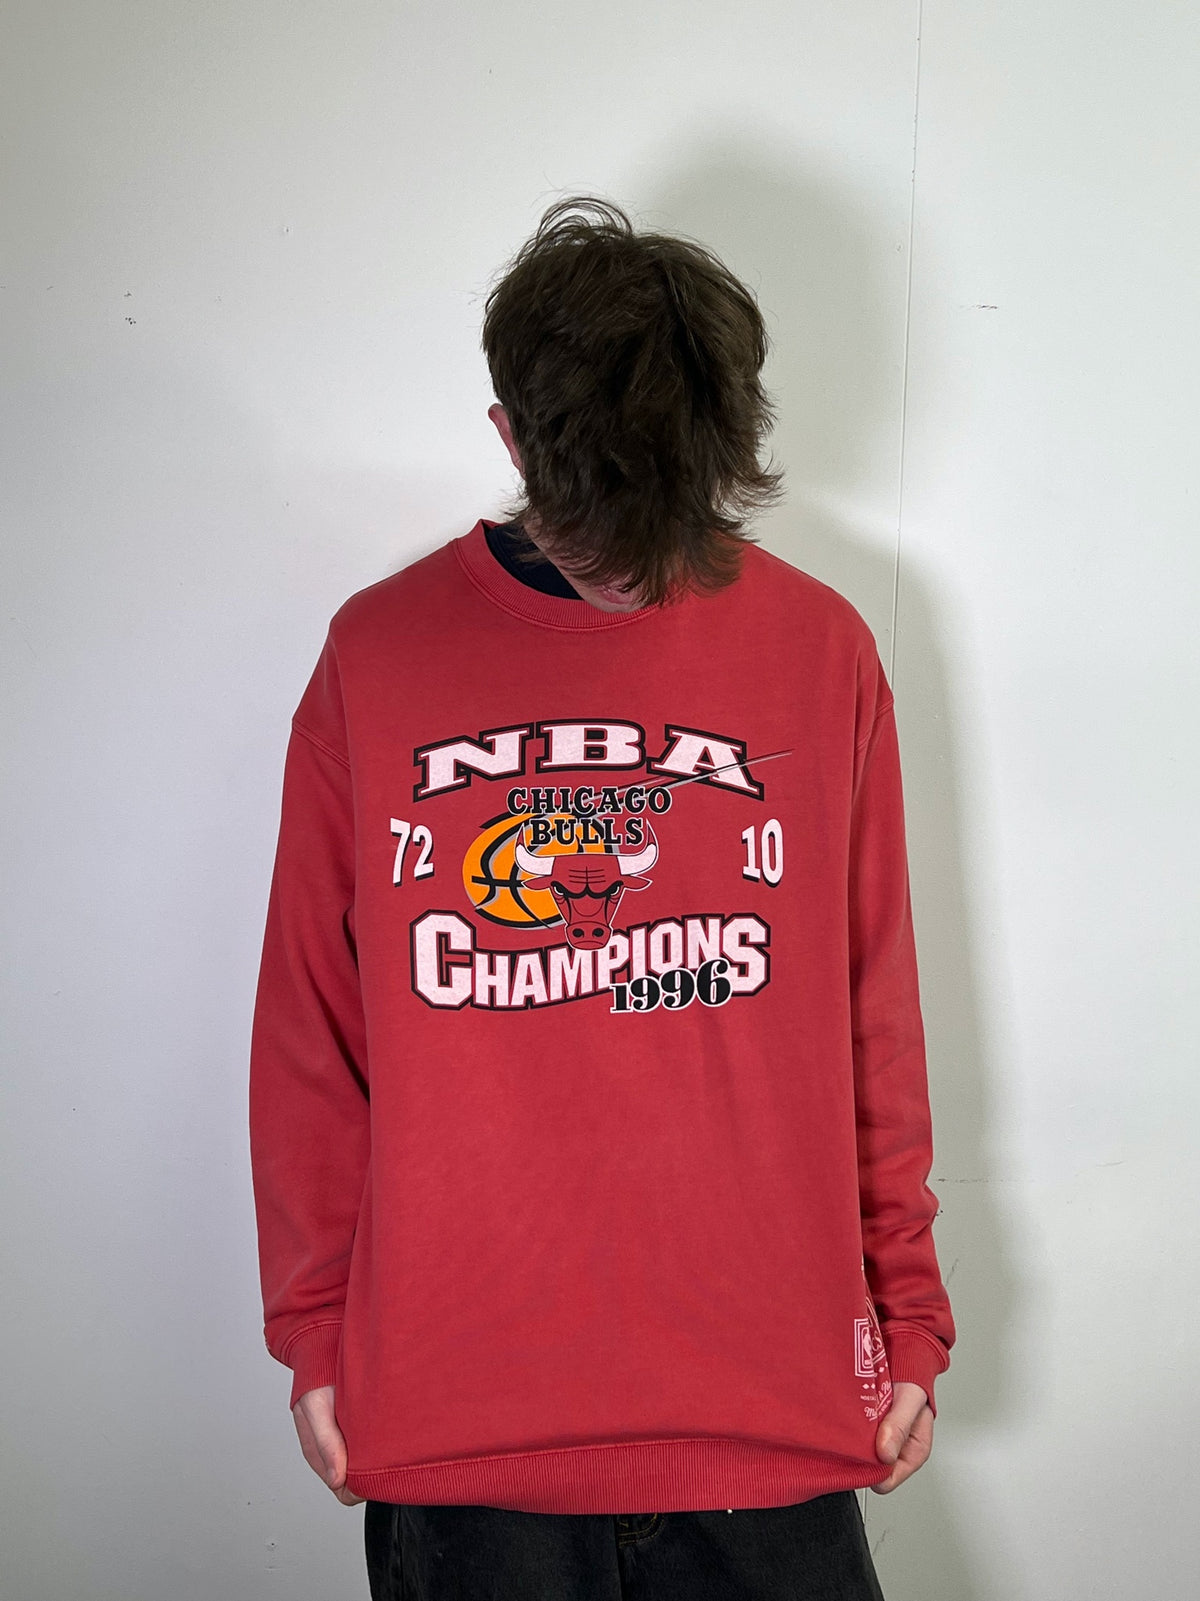 Chicago Bulls 1996 Champions Faded Red Sweatshirt